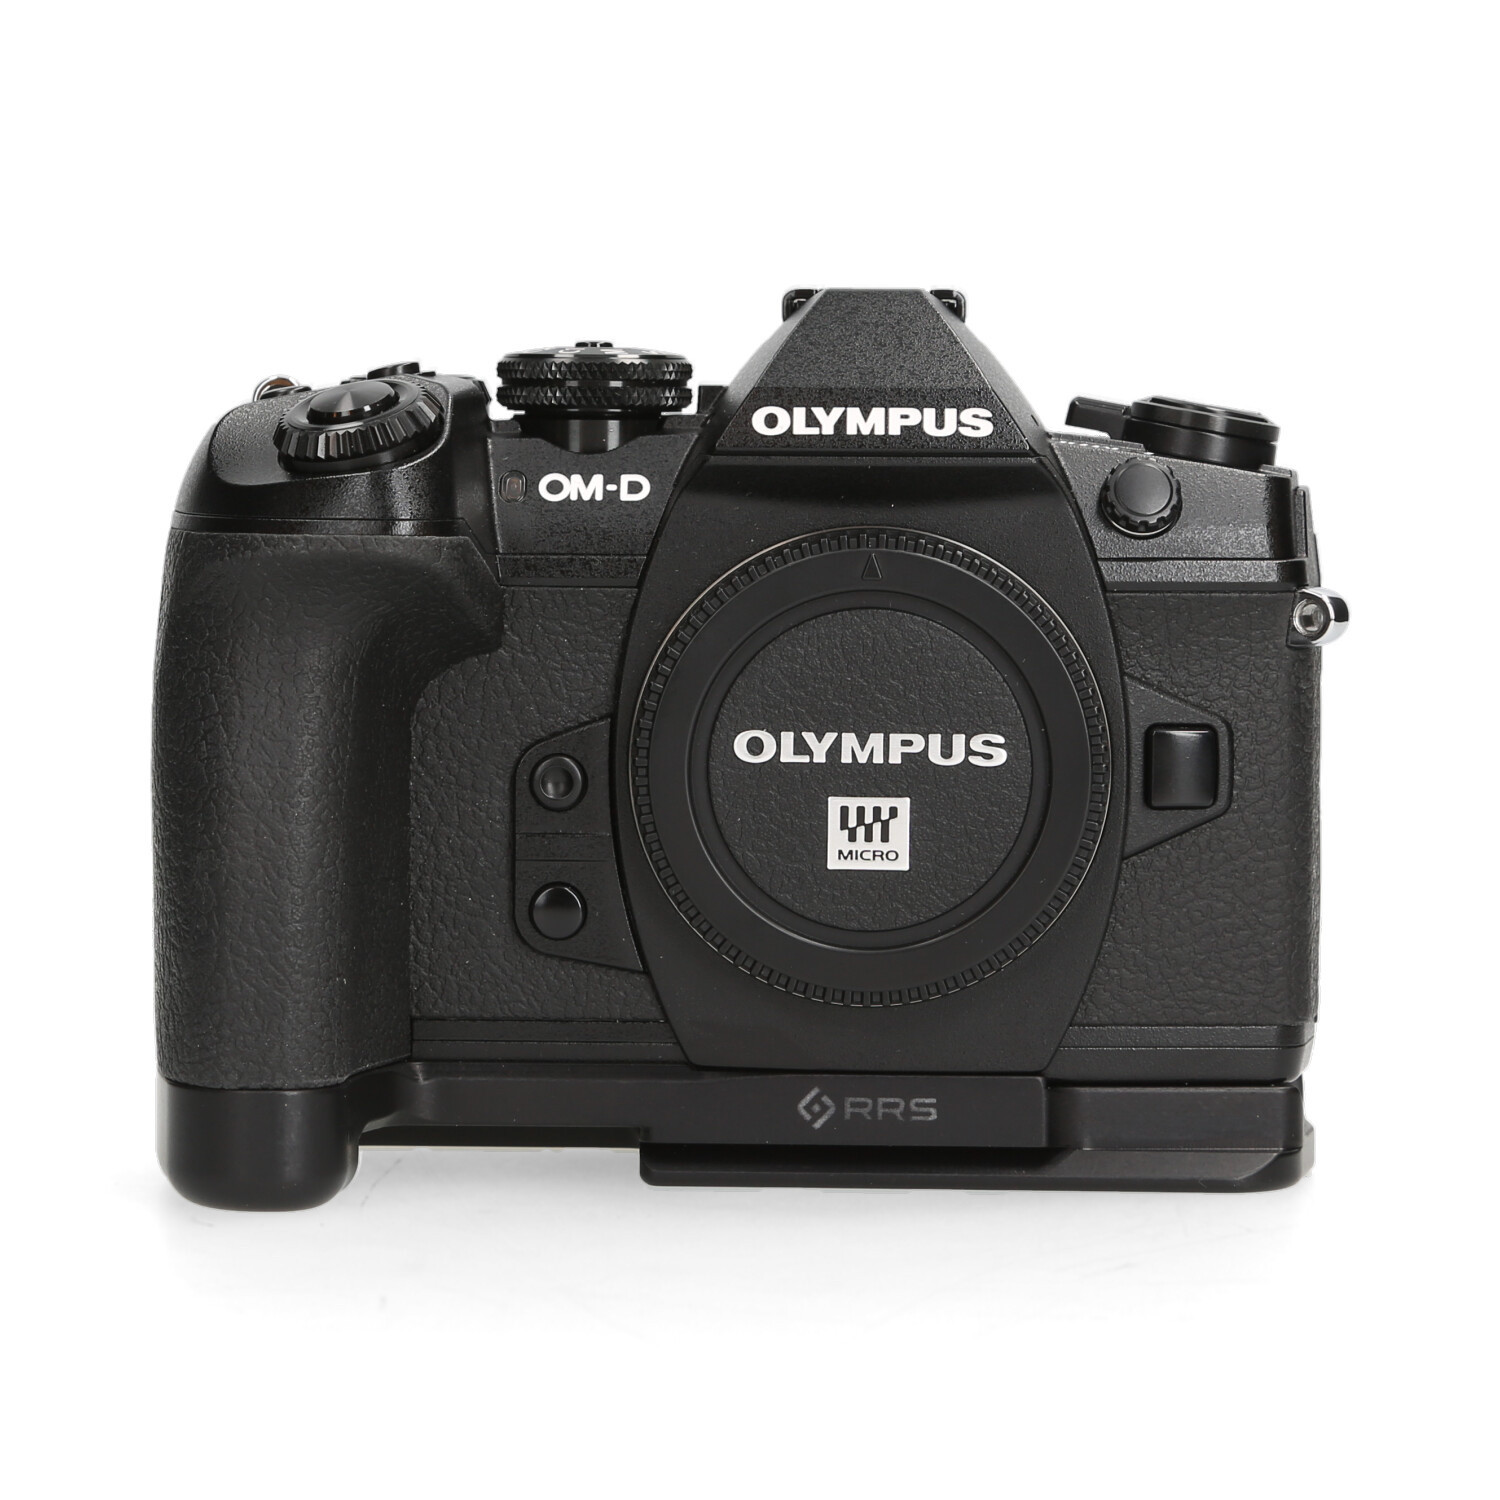 Olympus Olympus OM-D E-M1 II + RRS Grip - 3.255 kliks